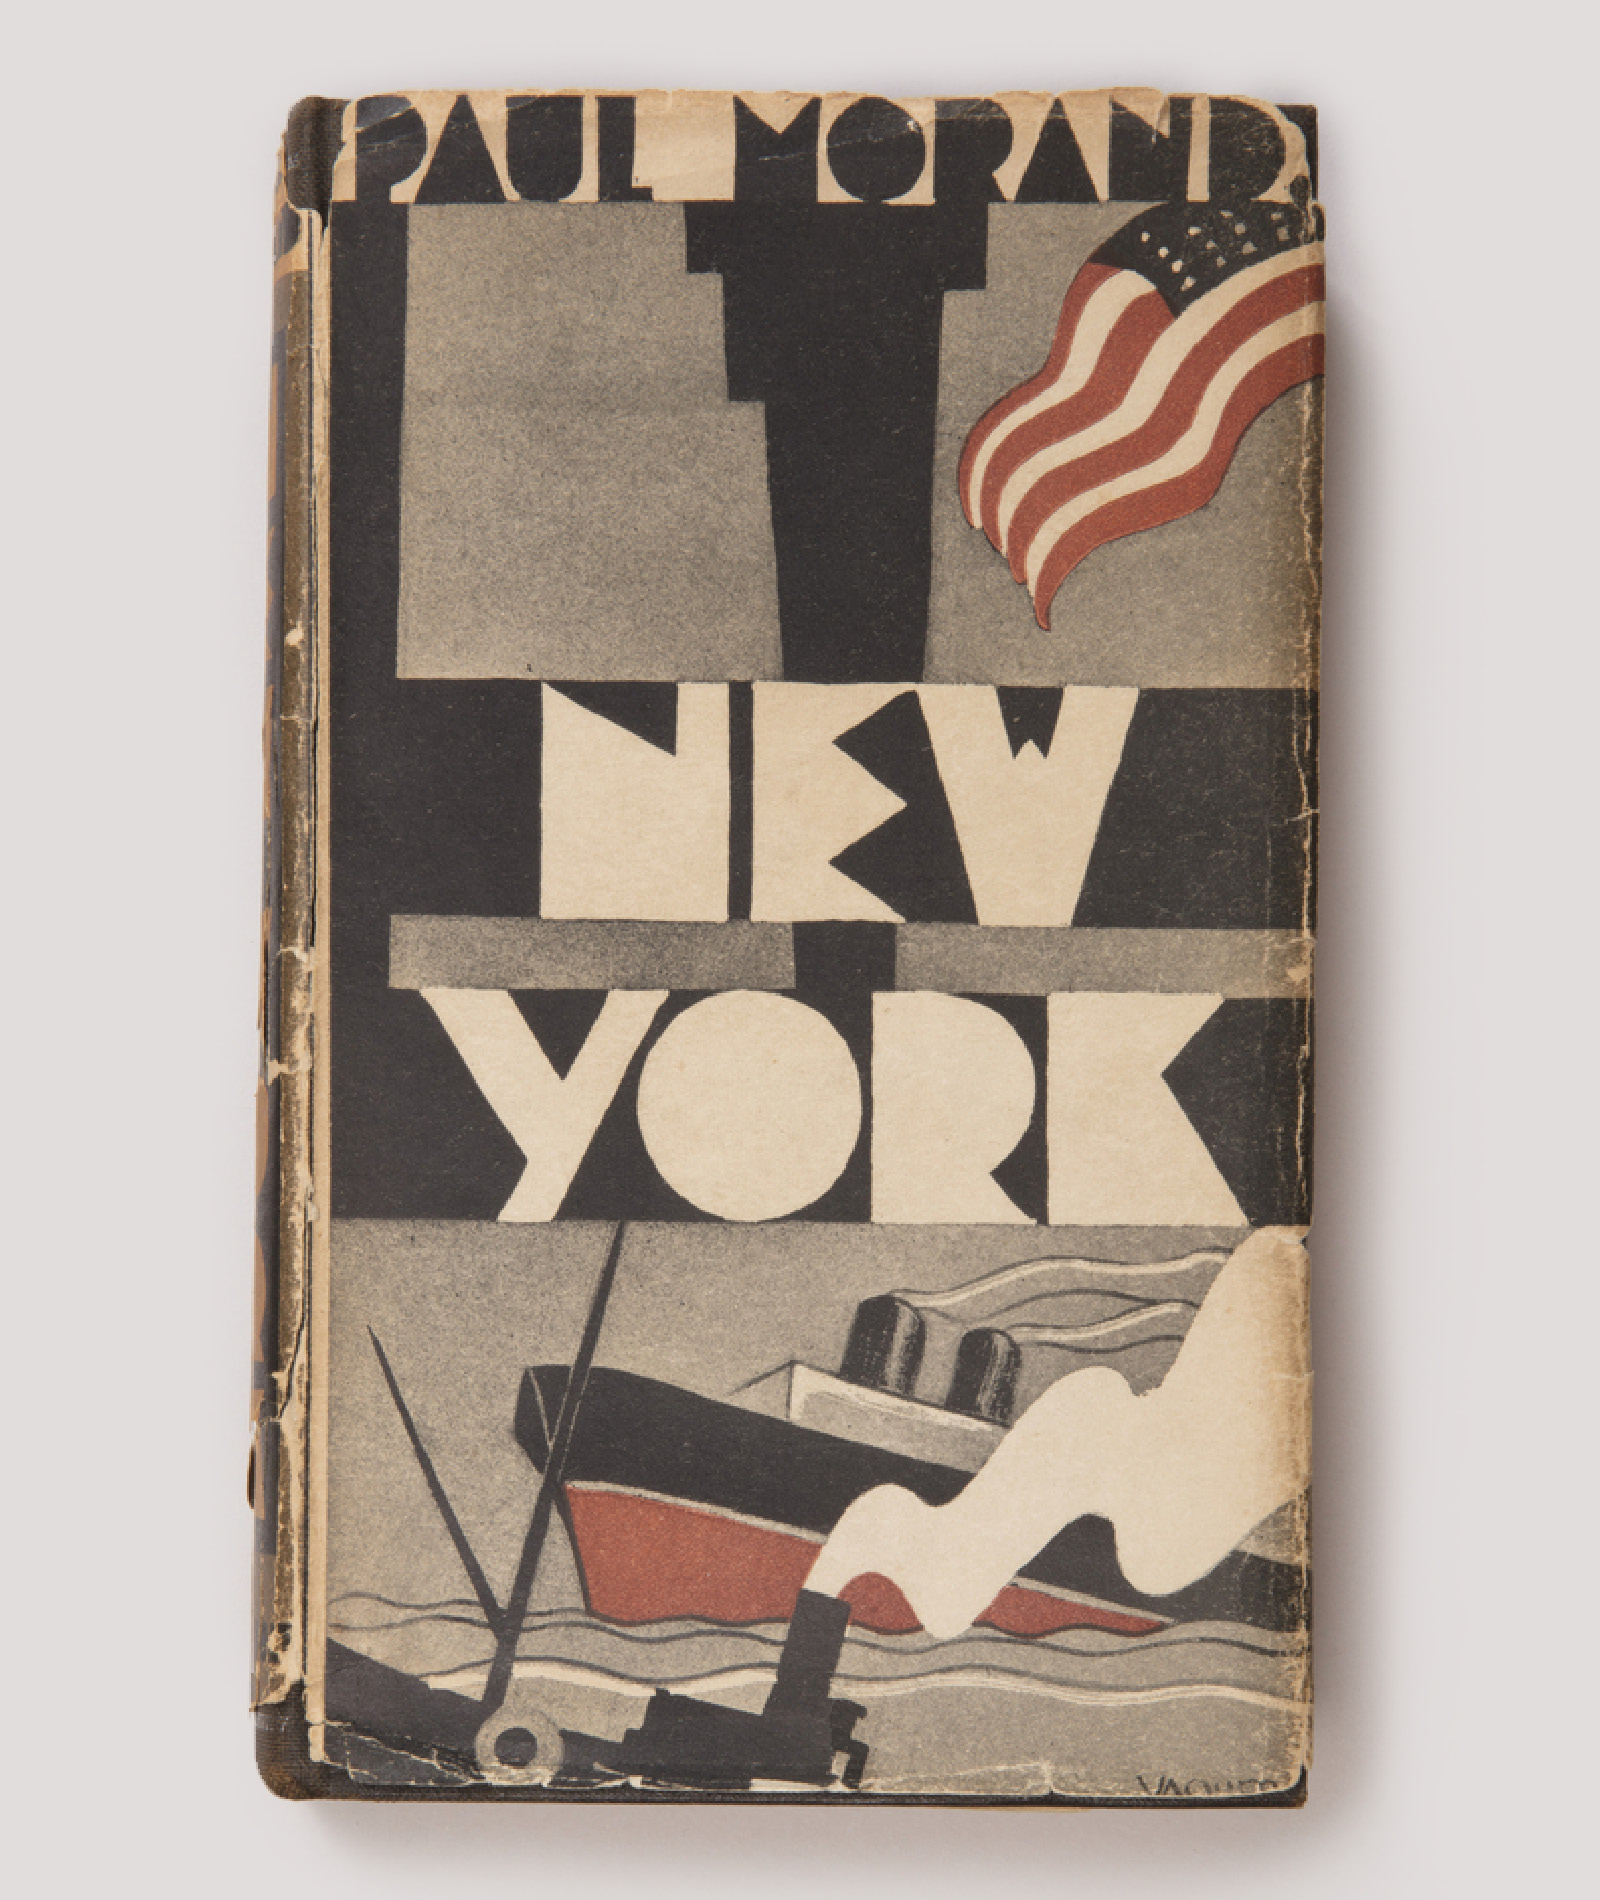 New York by Paul Morand